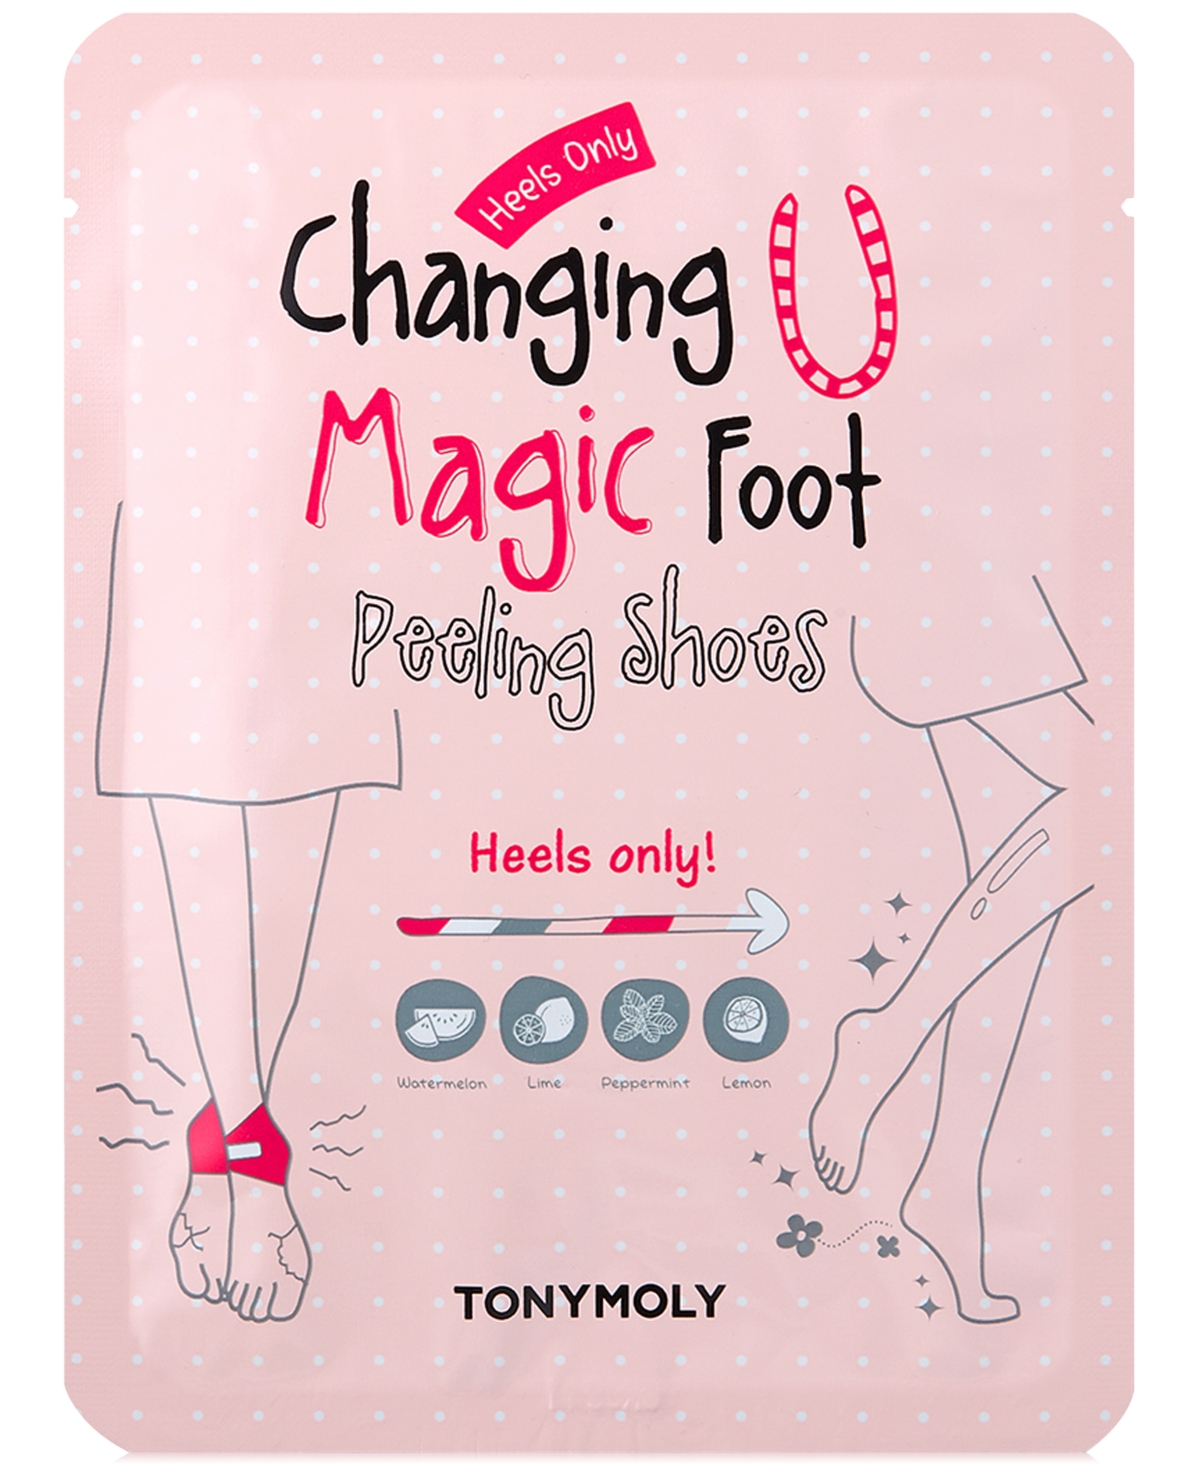 Tonymoly Changing U Magic Foot Peeling Shoes - Heels Only